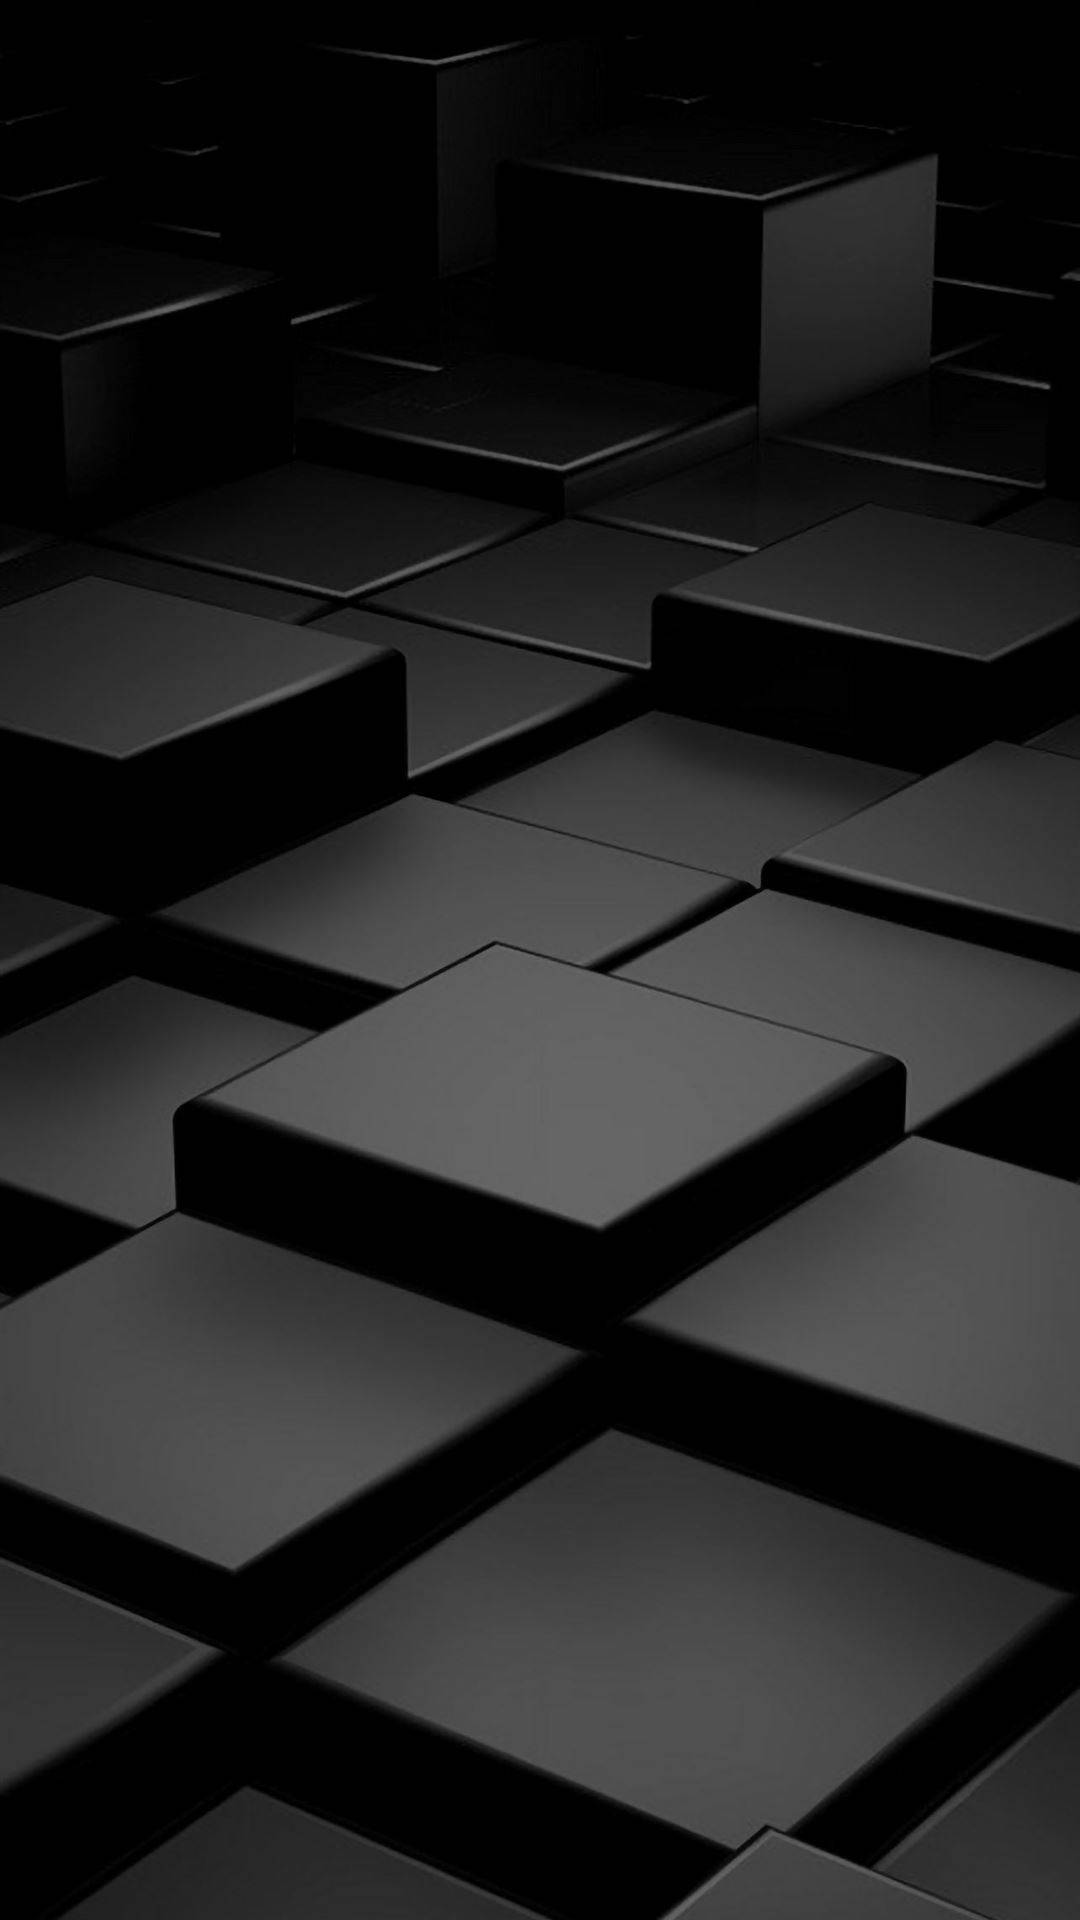 Blocks On Black Iphone 6 Plus Wallpaper